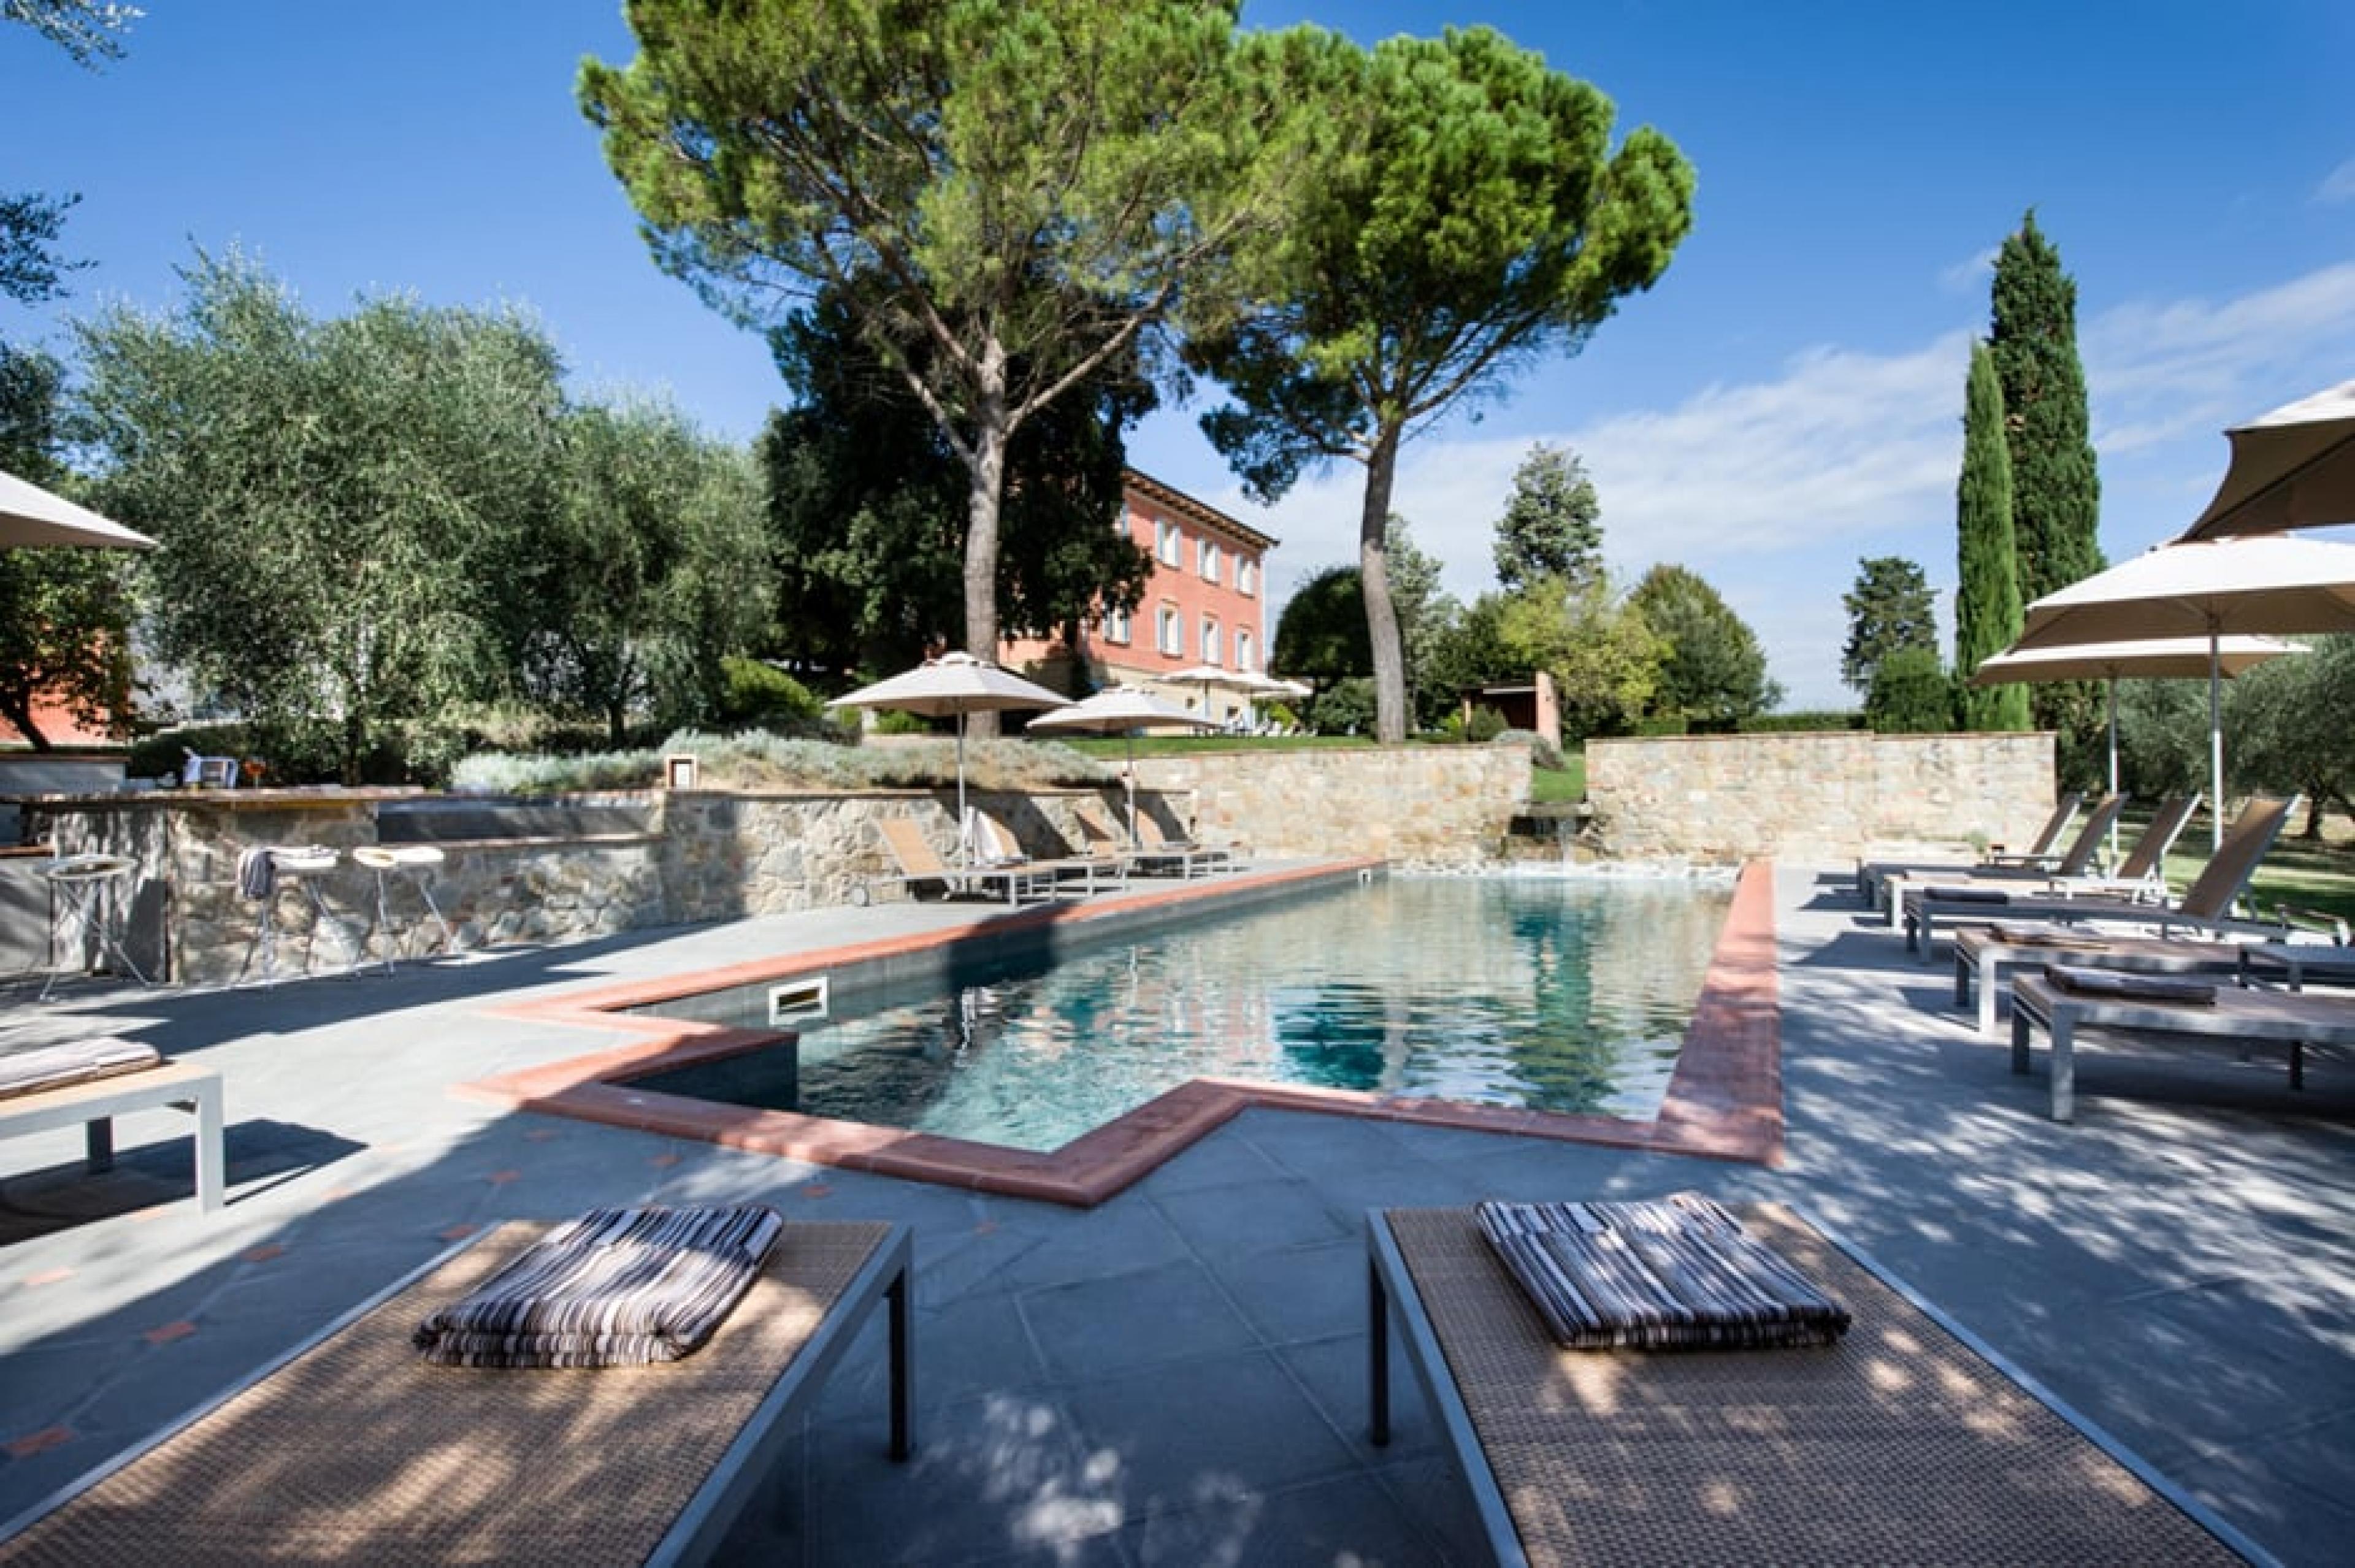 Pool Lounge at Fontelunga Hotel and Villas, Tuscany, Italy